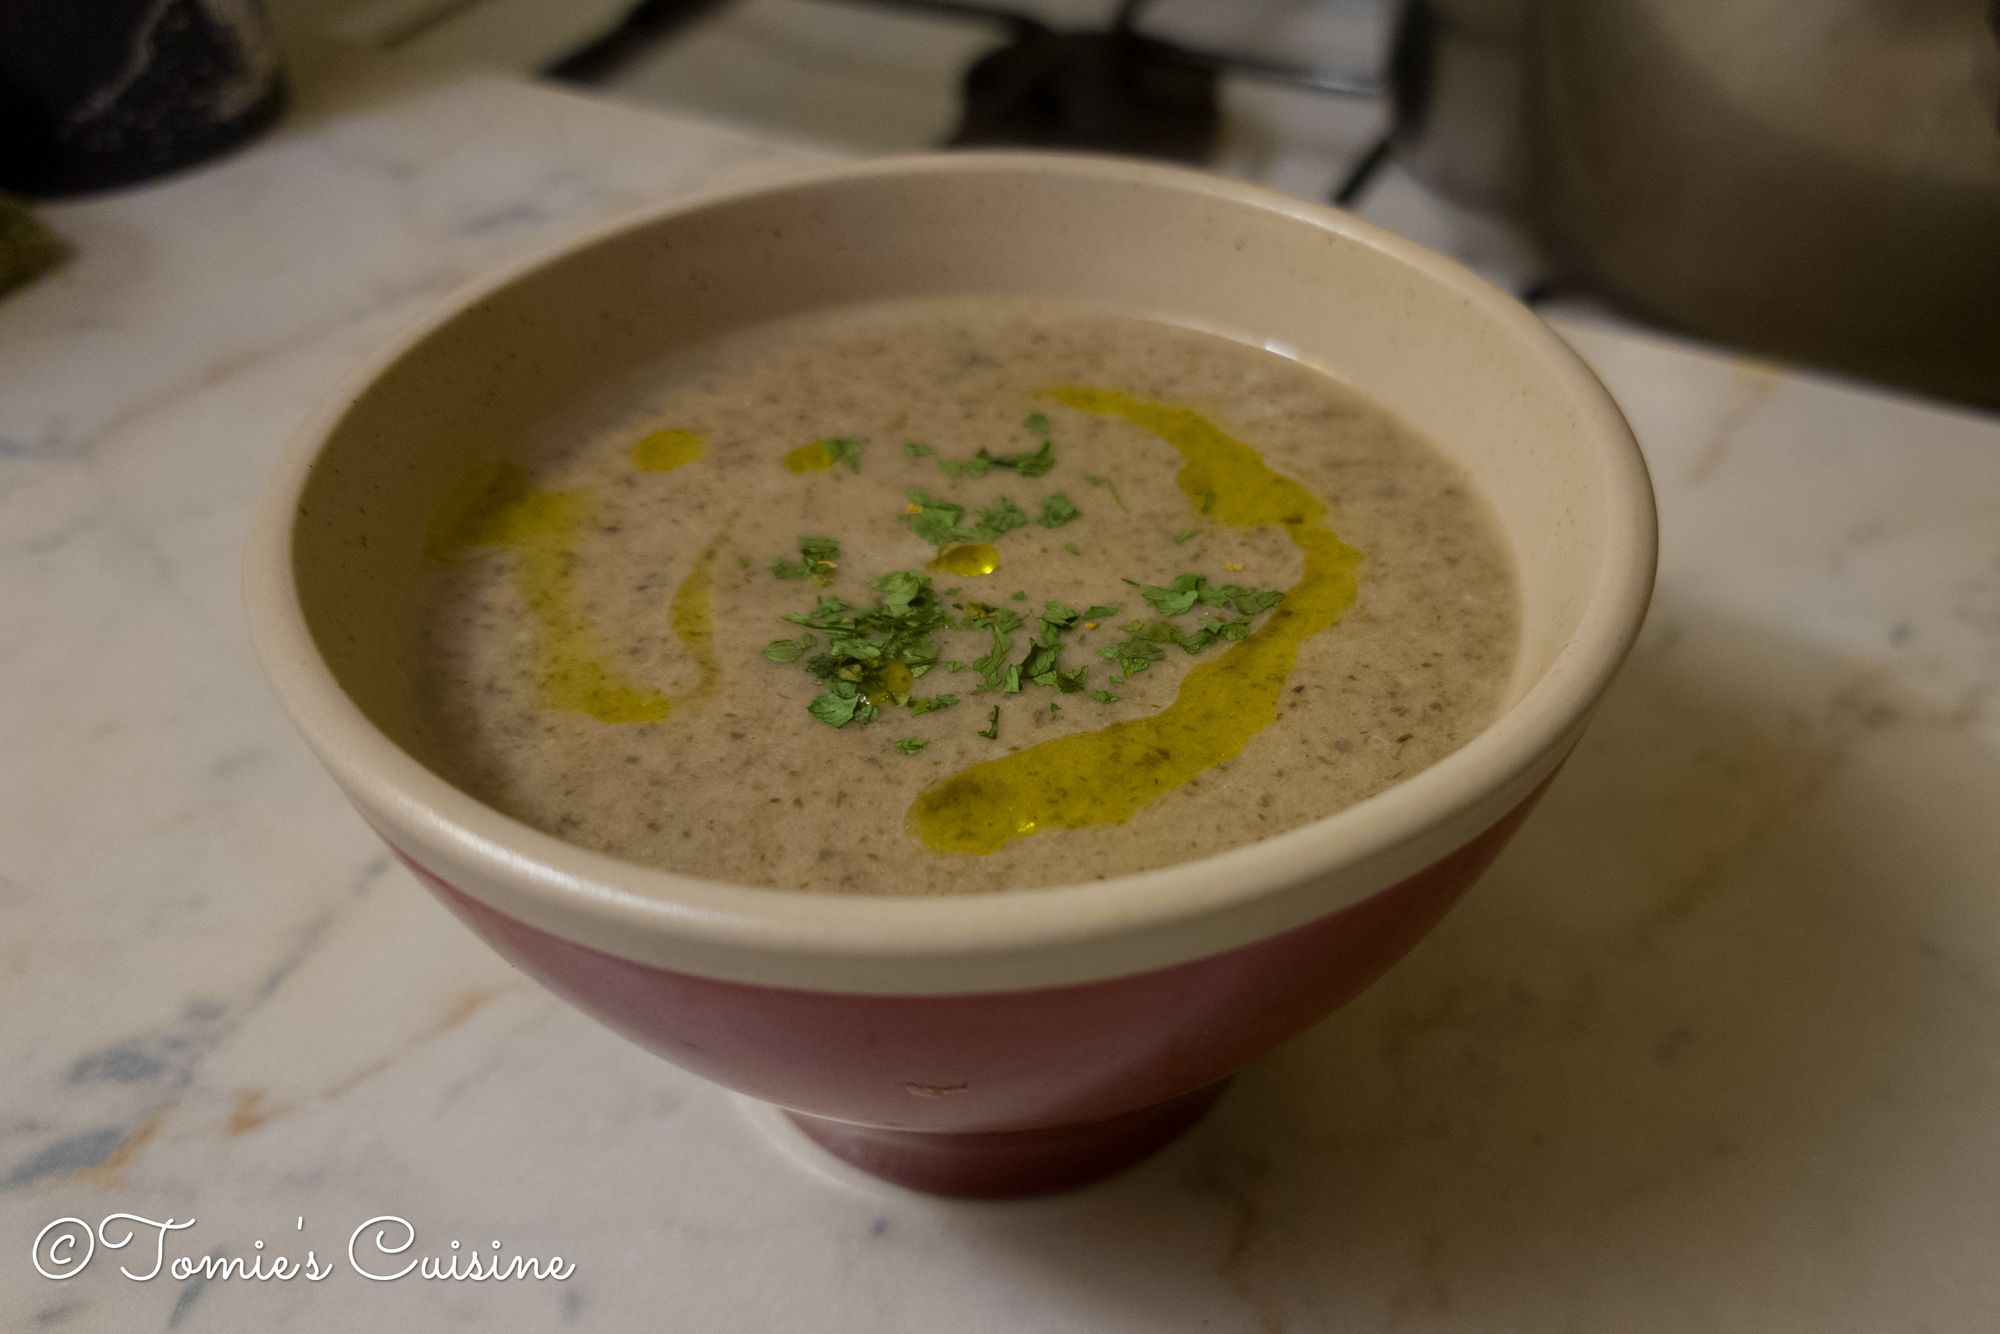 Enjoy a freshly prepared mushroom soup!